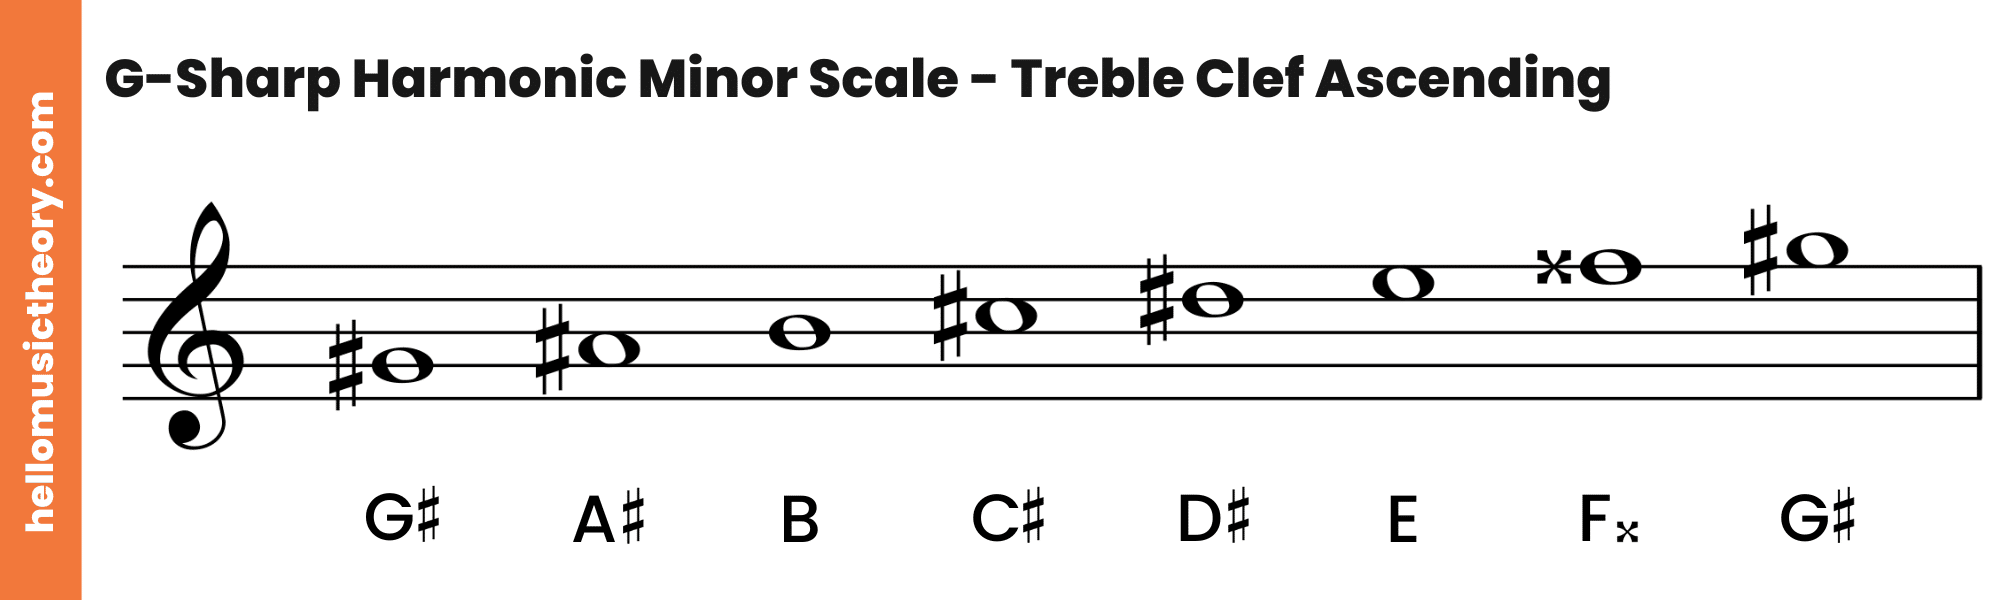 G-Sharp Harmonic Minor Scale Treble Clef Ascending